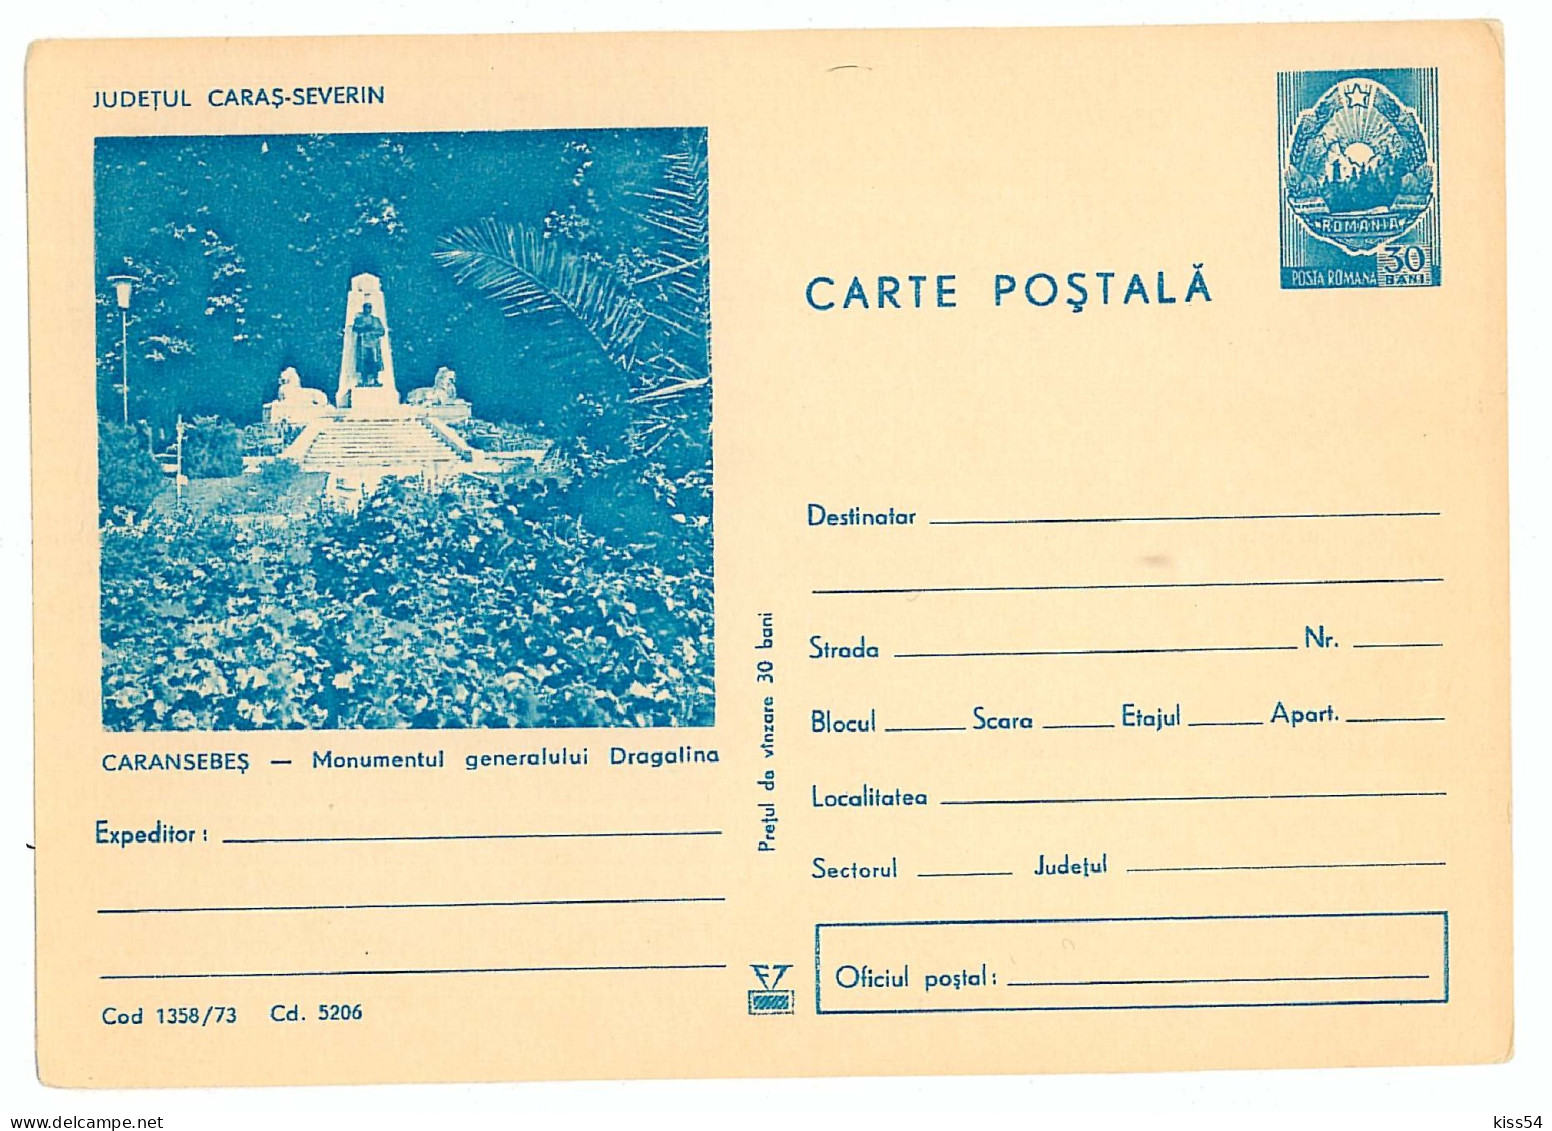 IP 73 - 1358 CARANSEBES - Stationery - Unused - 1973 - Postal Stationery